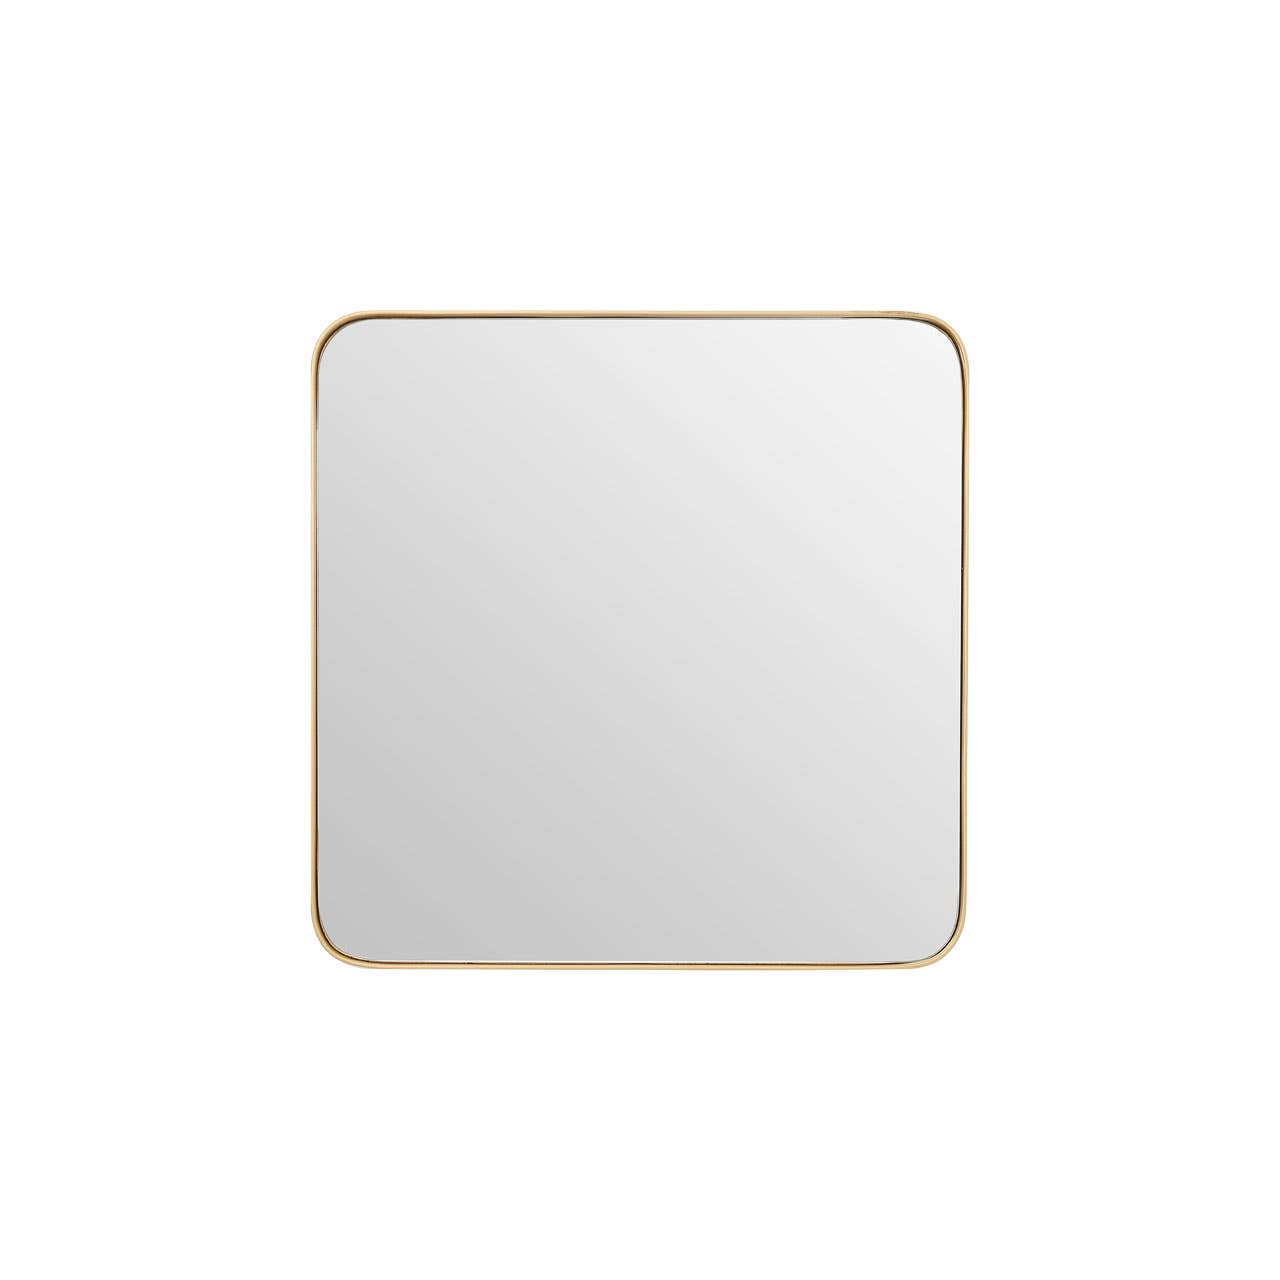 Small Gold Finish Square Wall Mirror